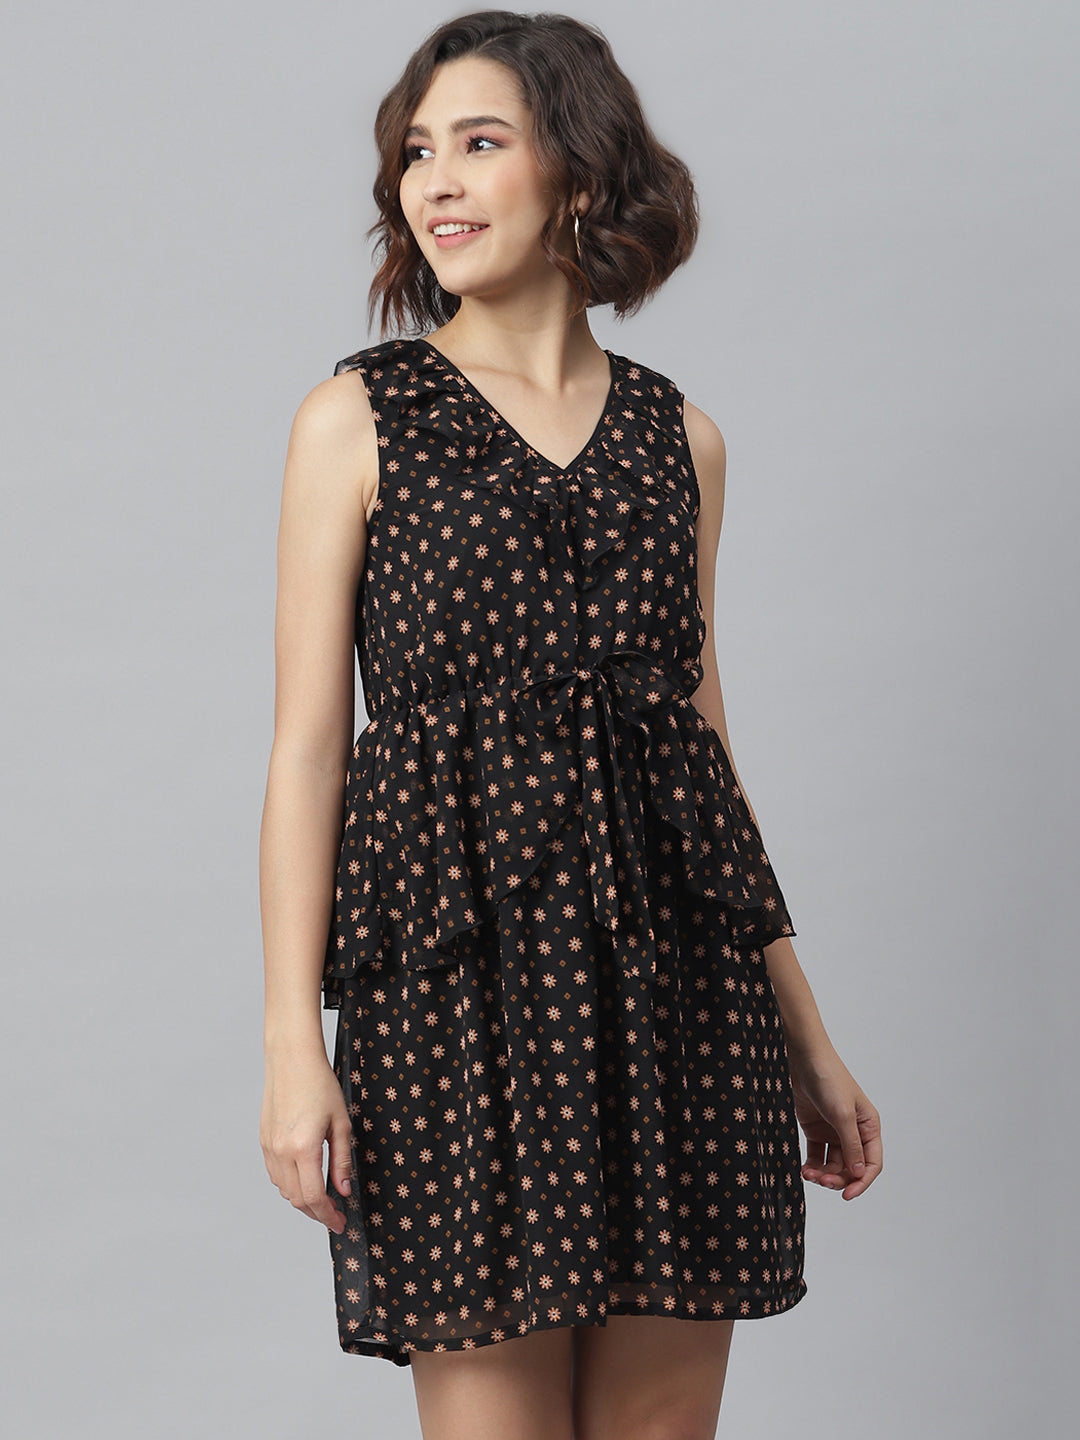 Women's Black Printed Peplum Style Dress